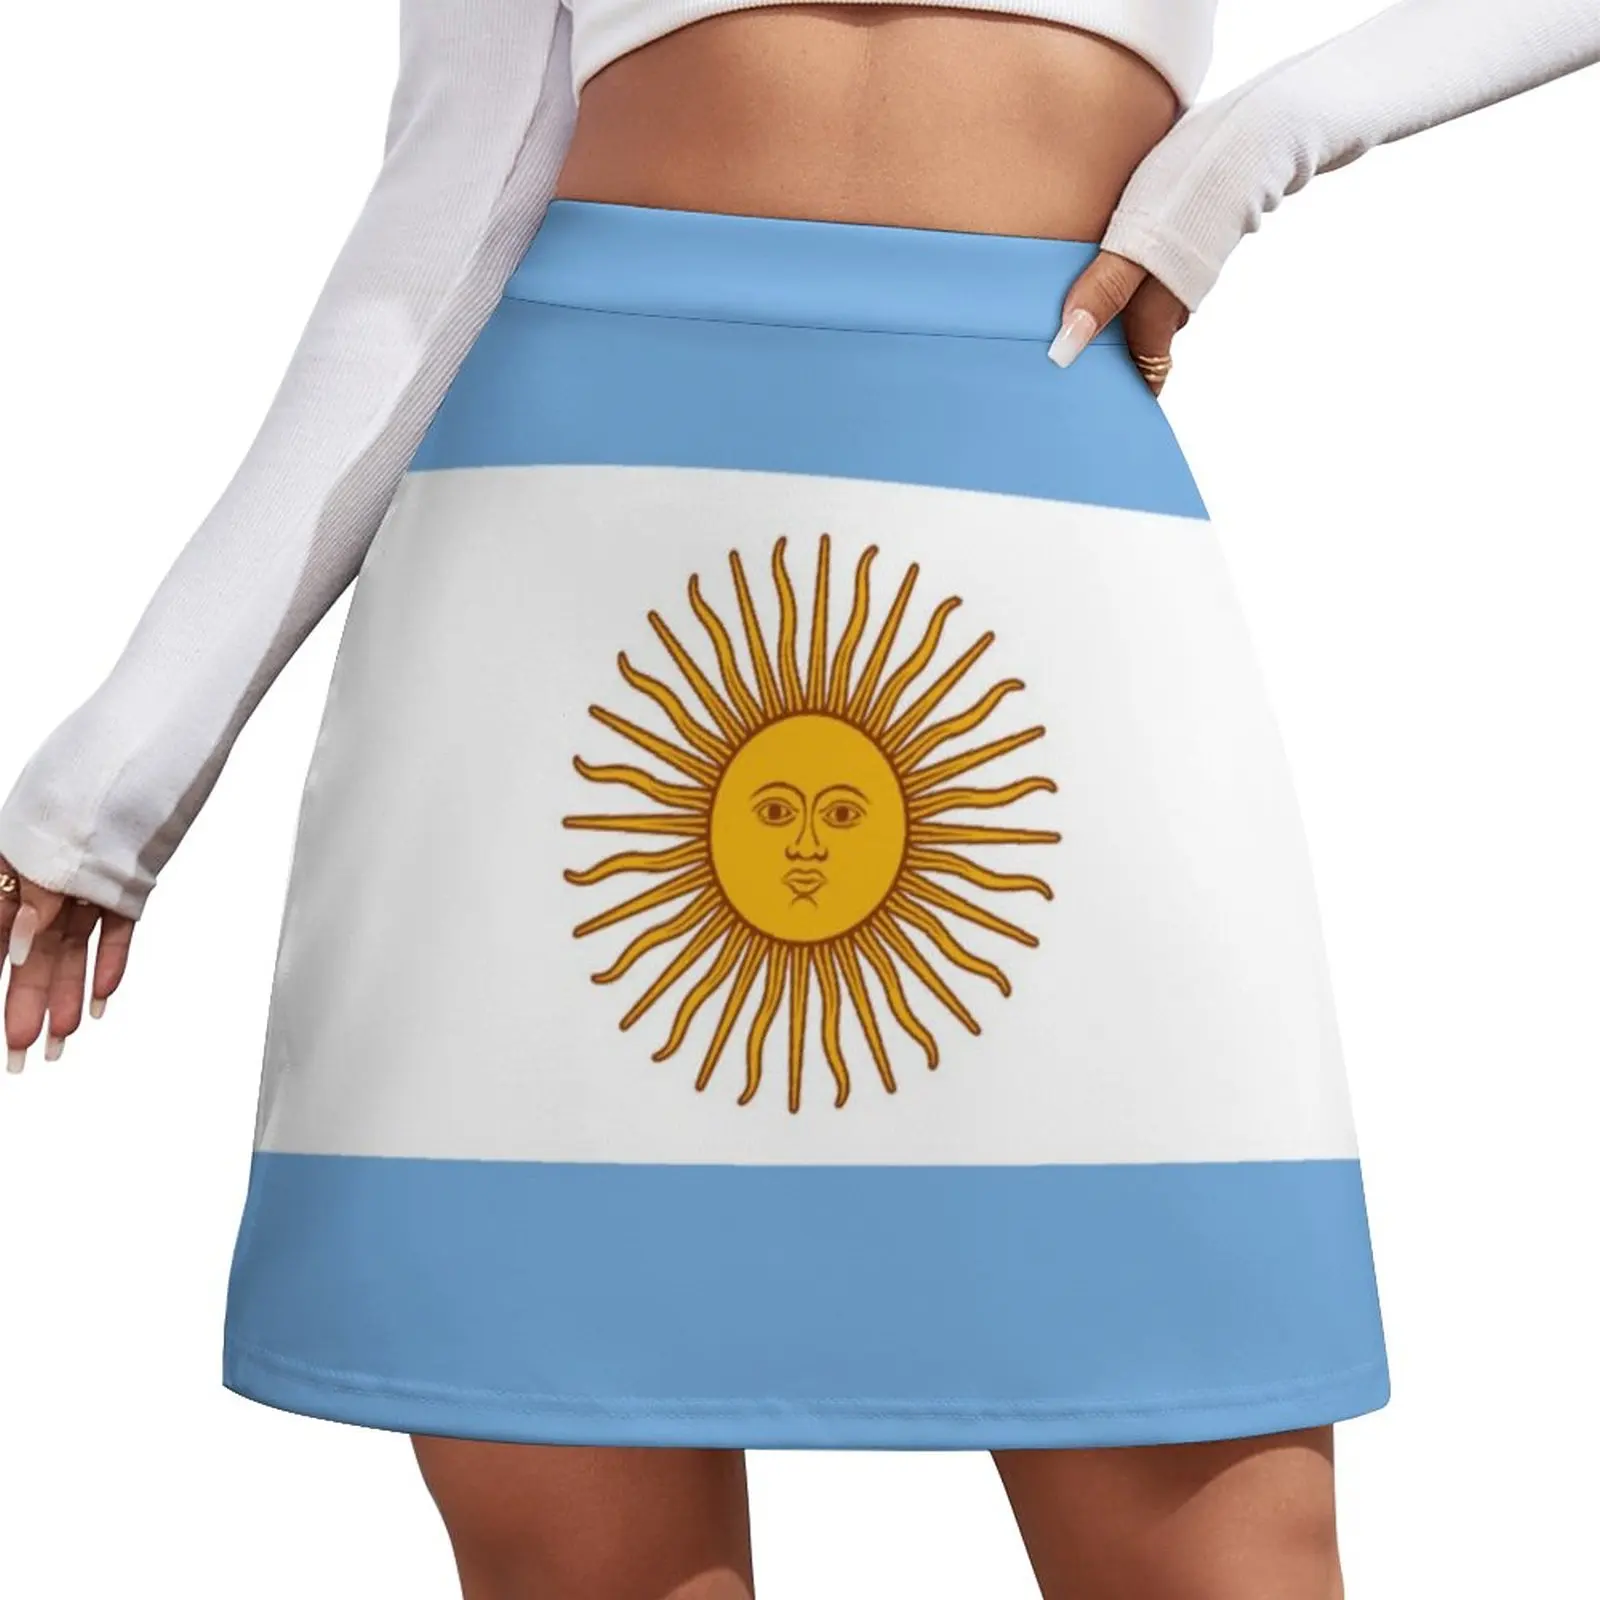 Flag of Argentina Mini Skirt Miniskirt woman cute skirt